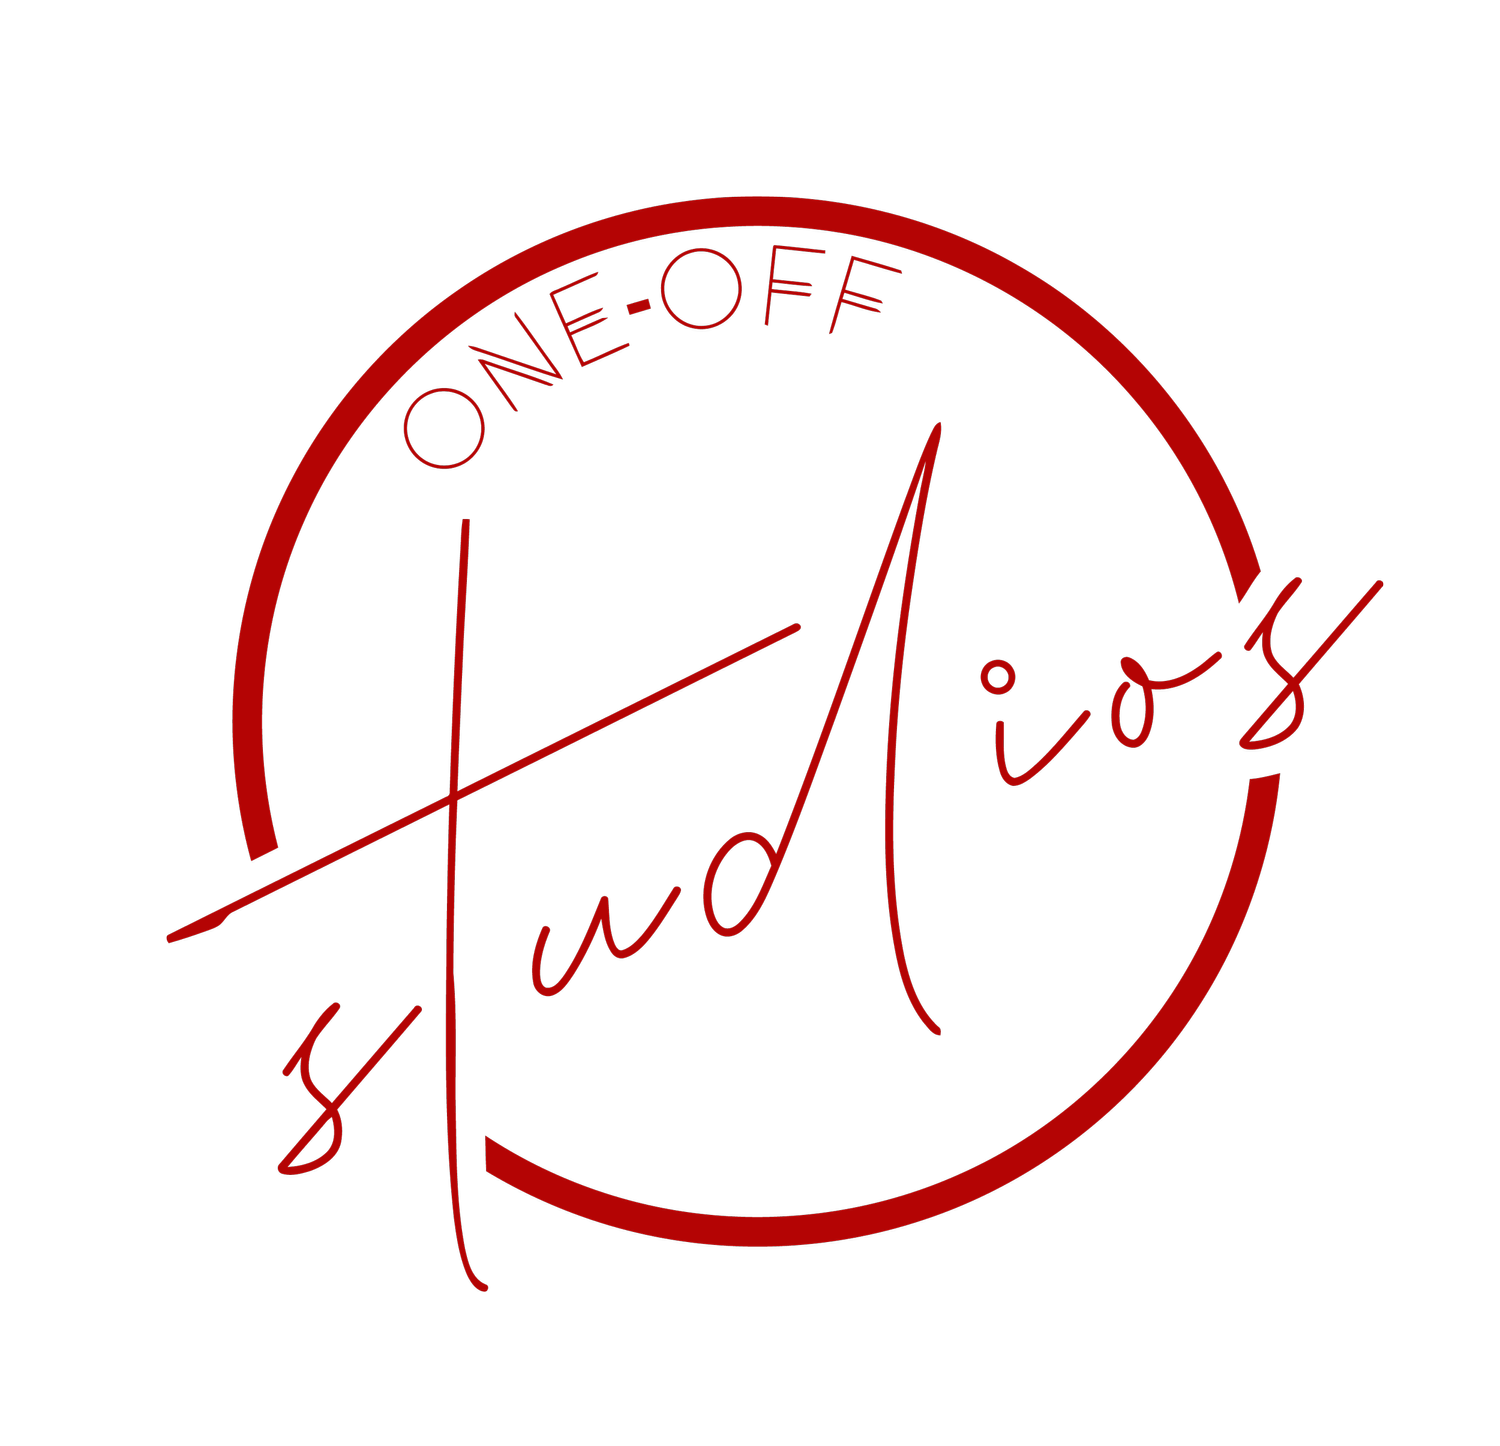 www.oneoffstudios.co